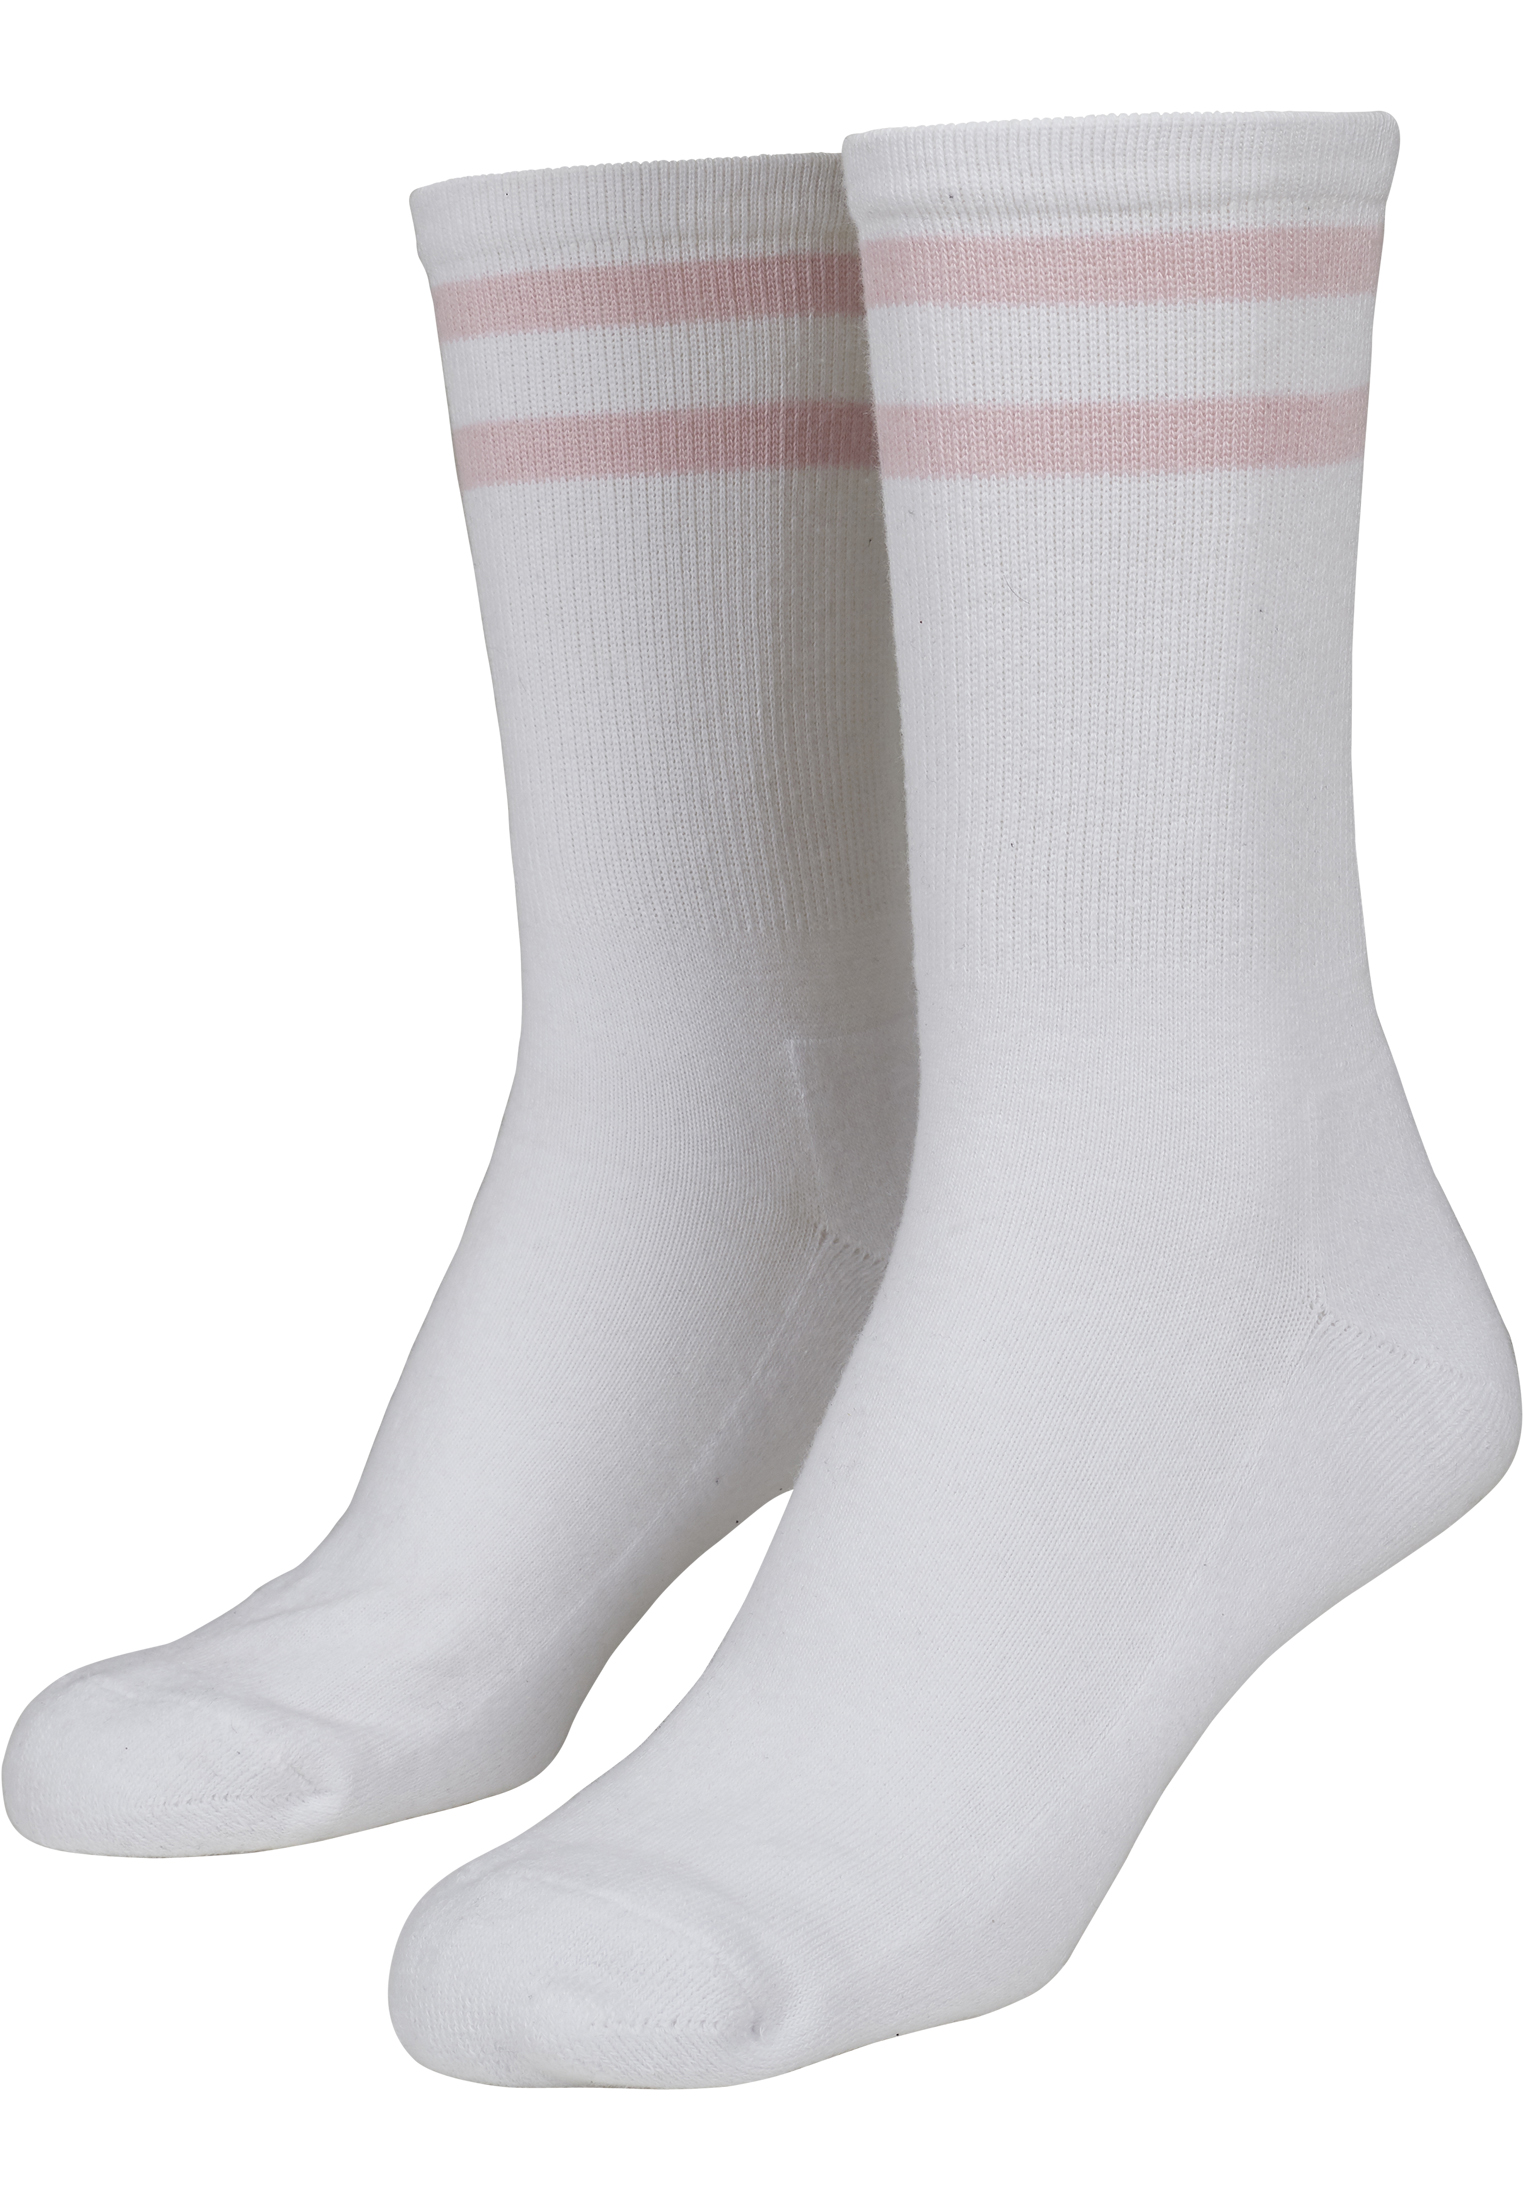 URBAN CLASSICS Chaussettes Rainbow réparti Socks 2-Pack Grey/White